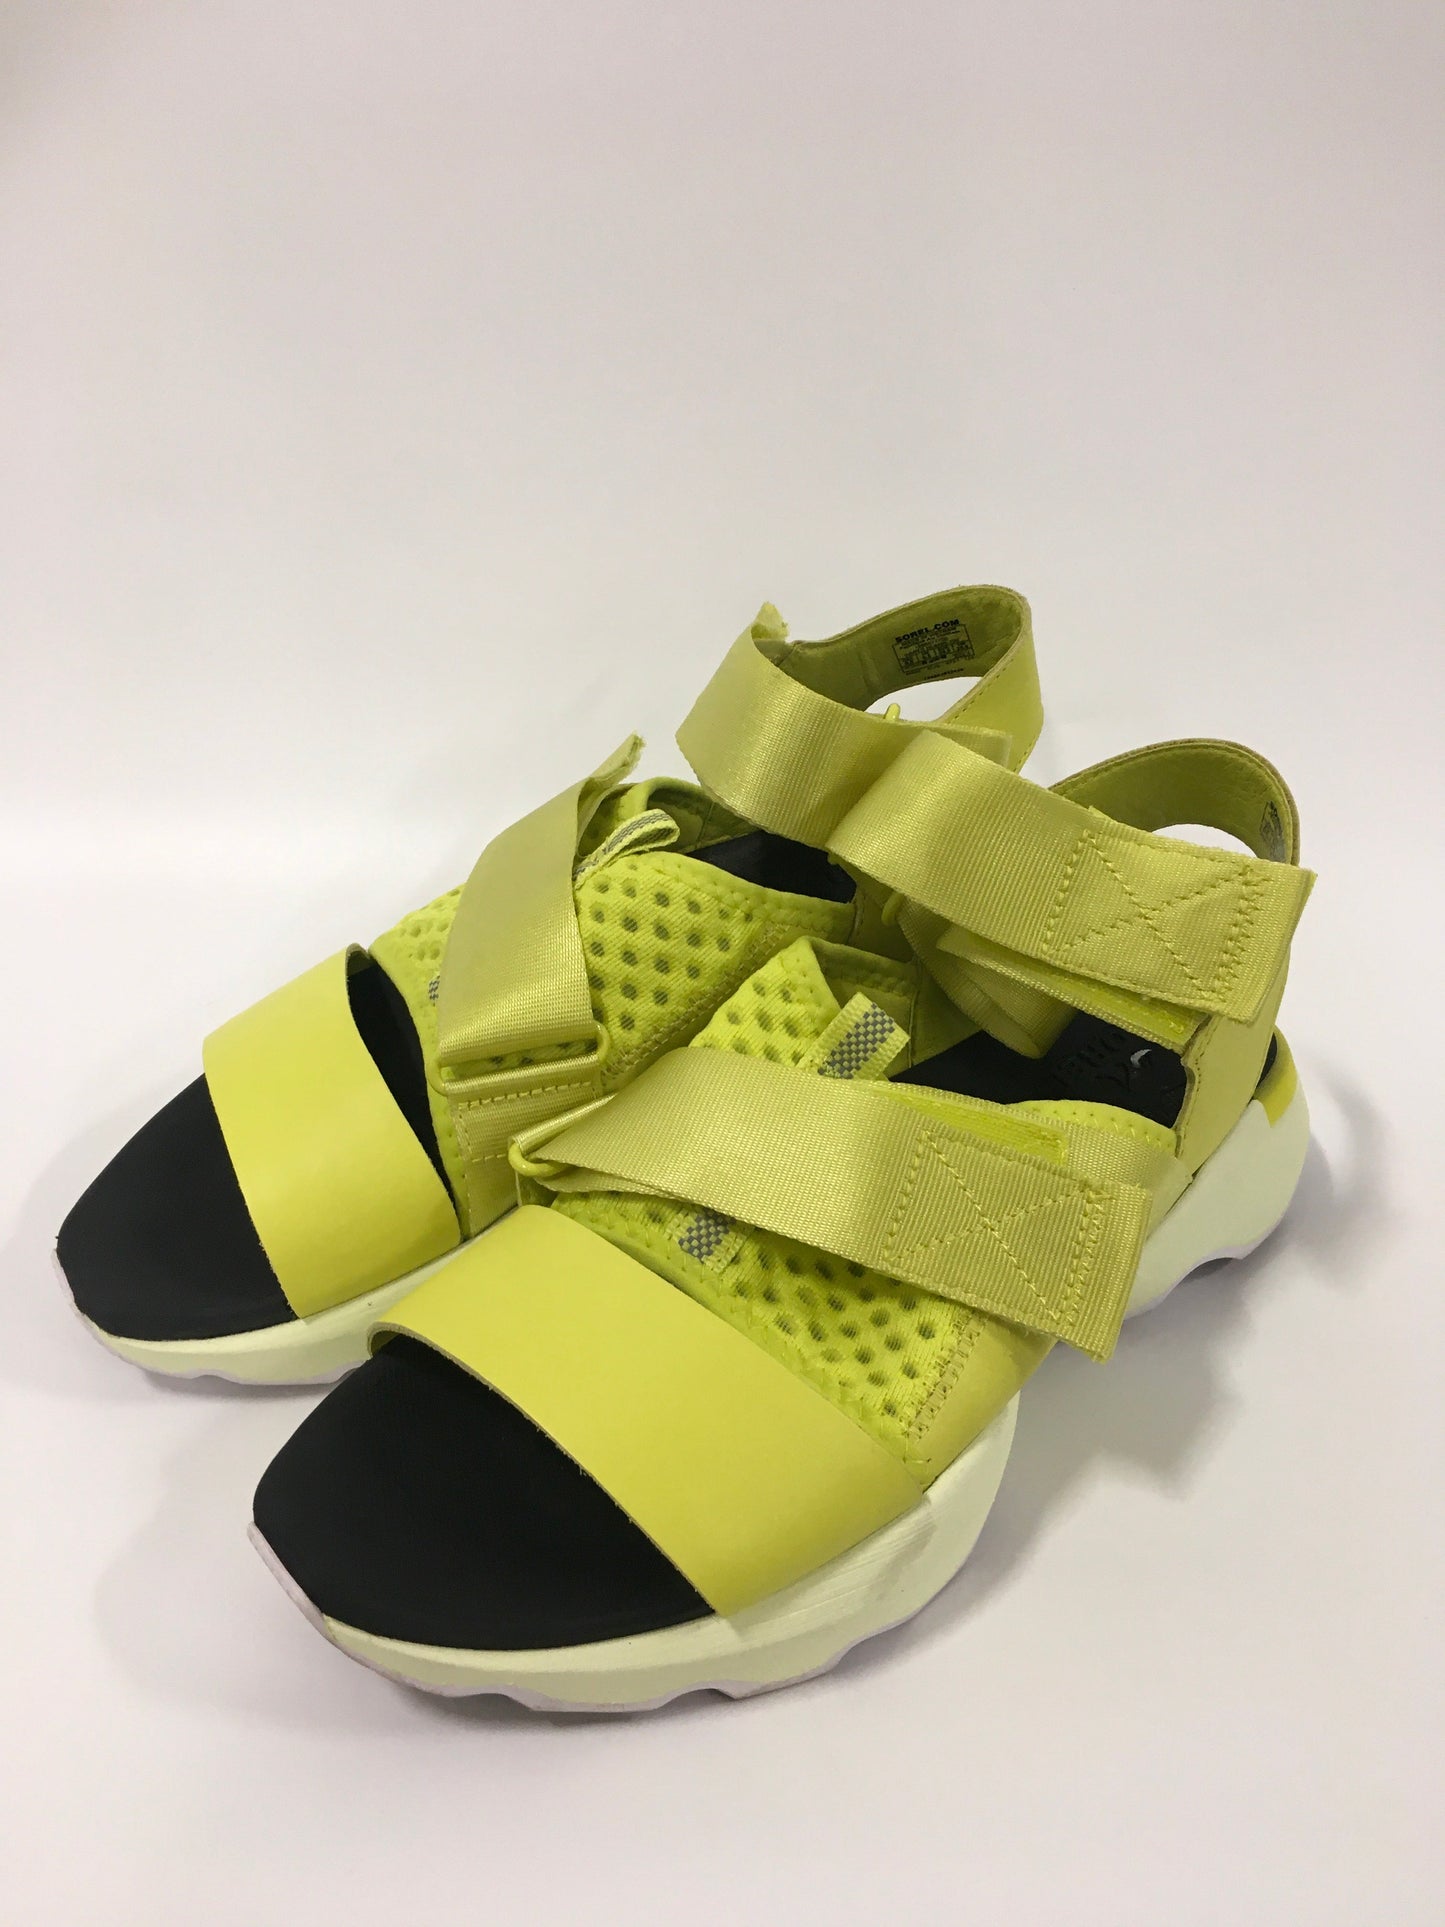 Green Sandals Heels Platform Sorel, Size 8.5